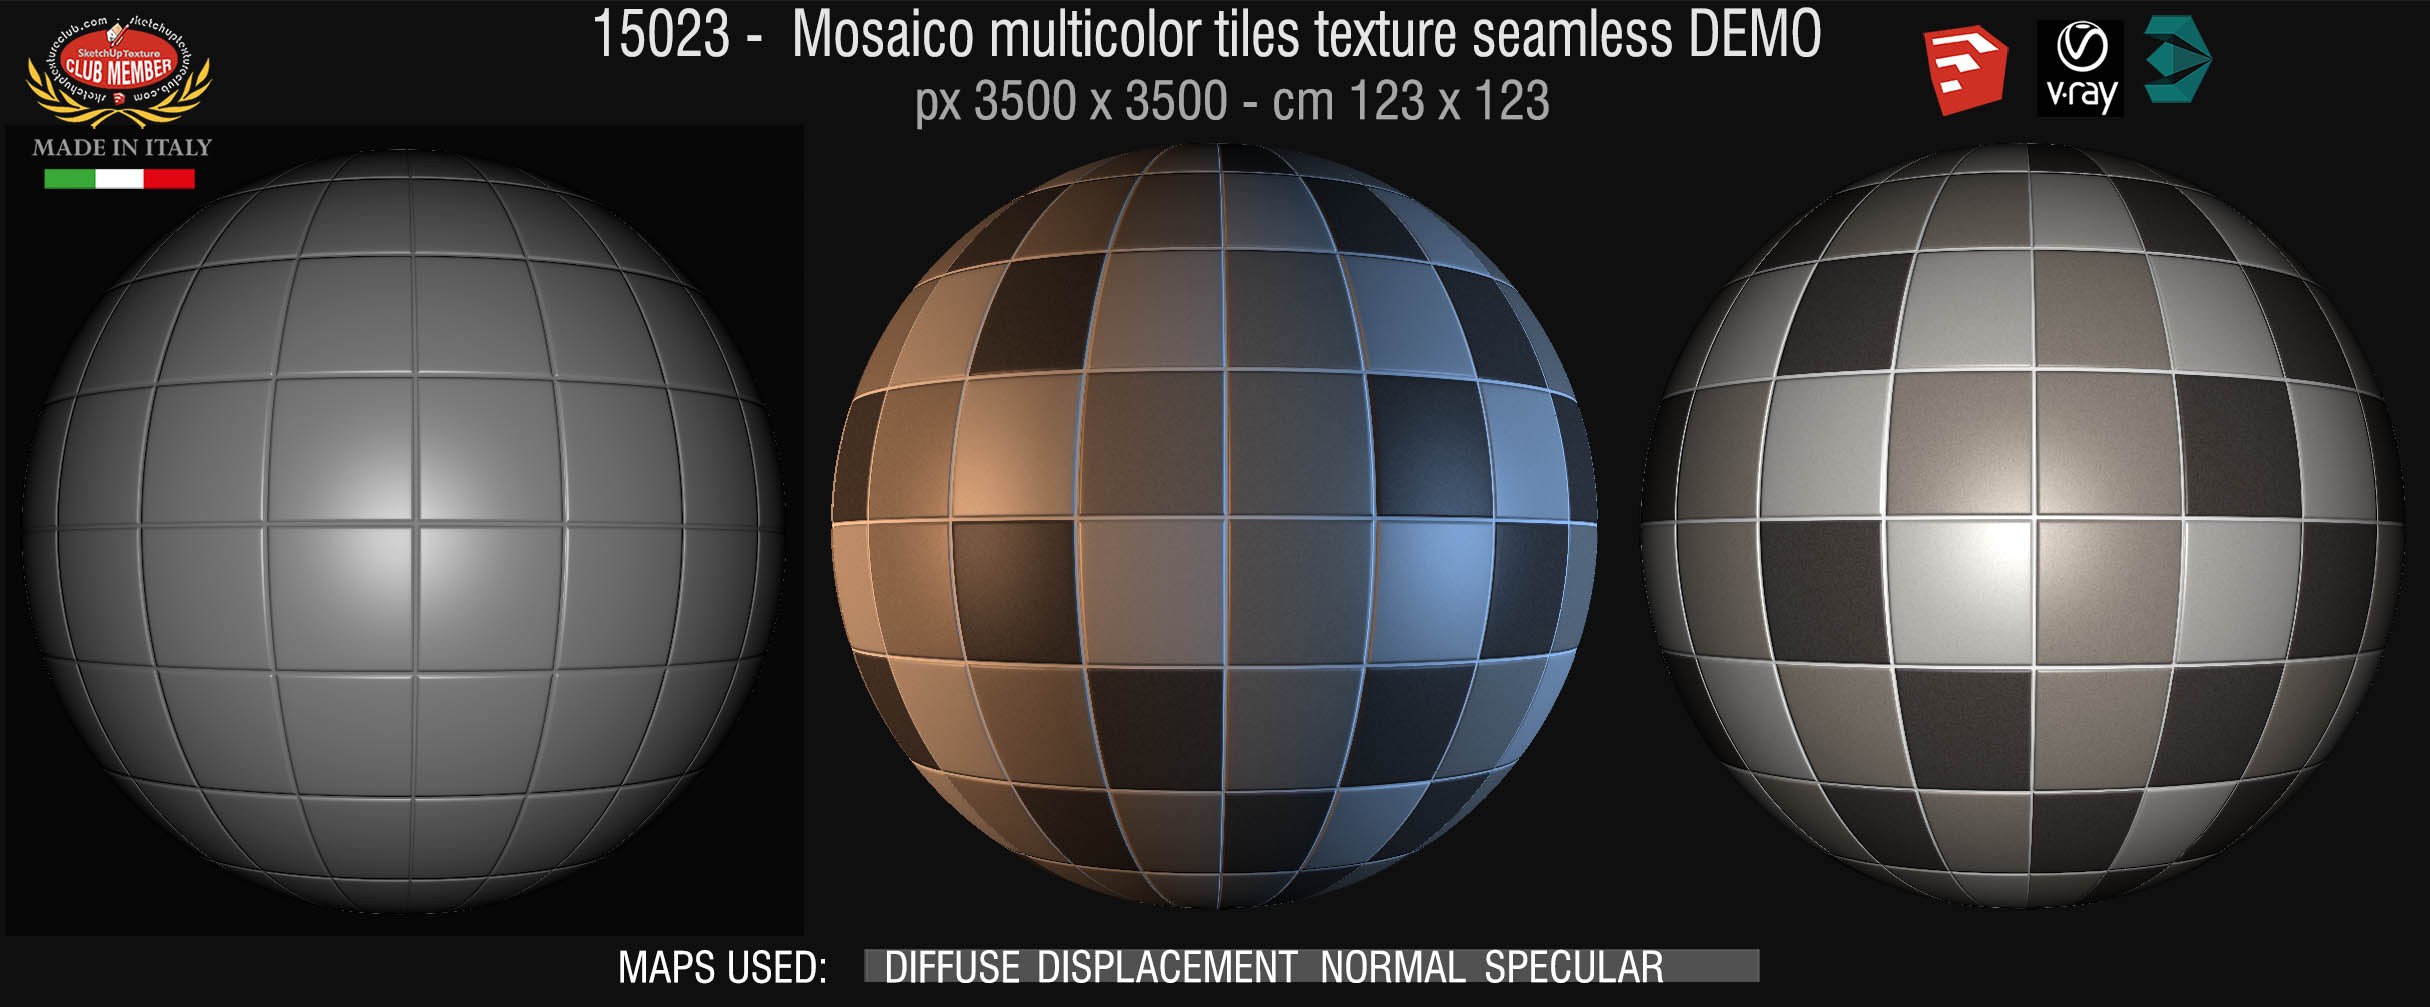 15023 Mosaico multicolor tiles texture seamless + maps DEMO